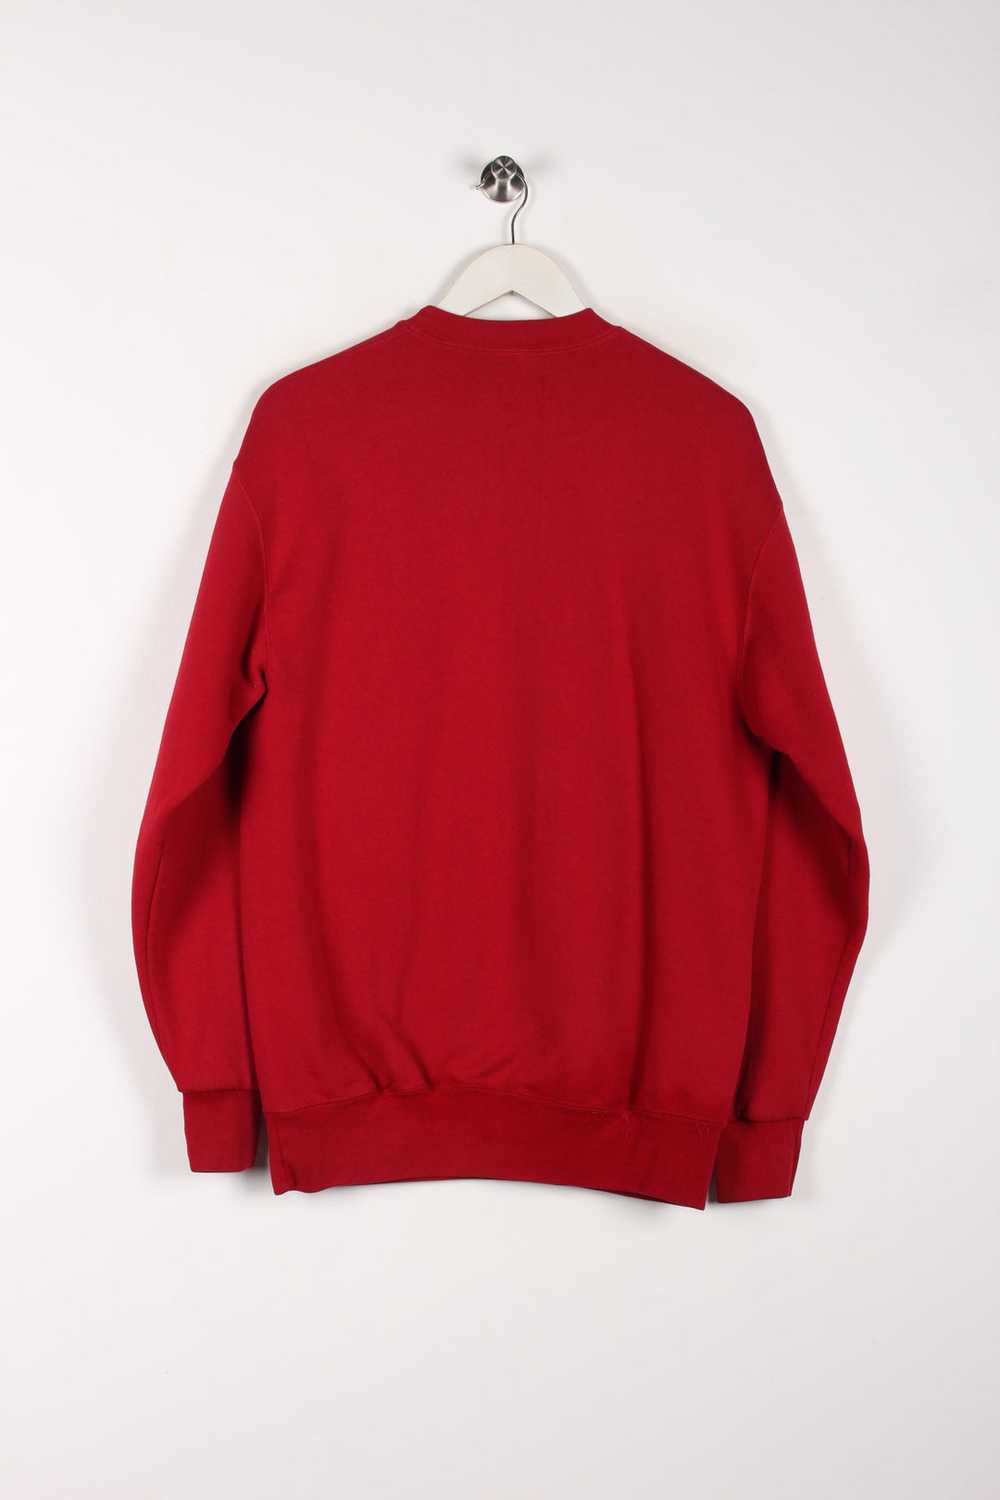 90's Washington Redskins Sweatshirt Red Large - image 3